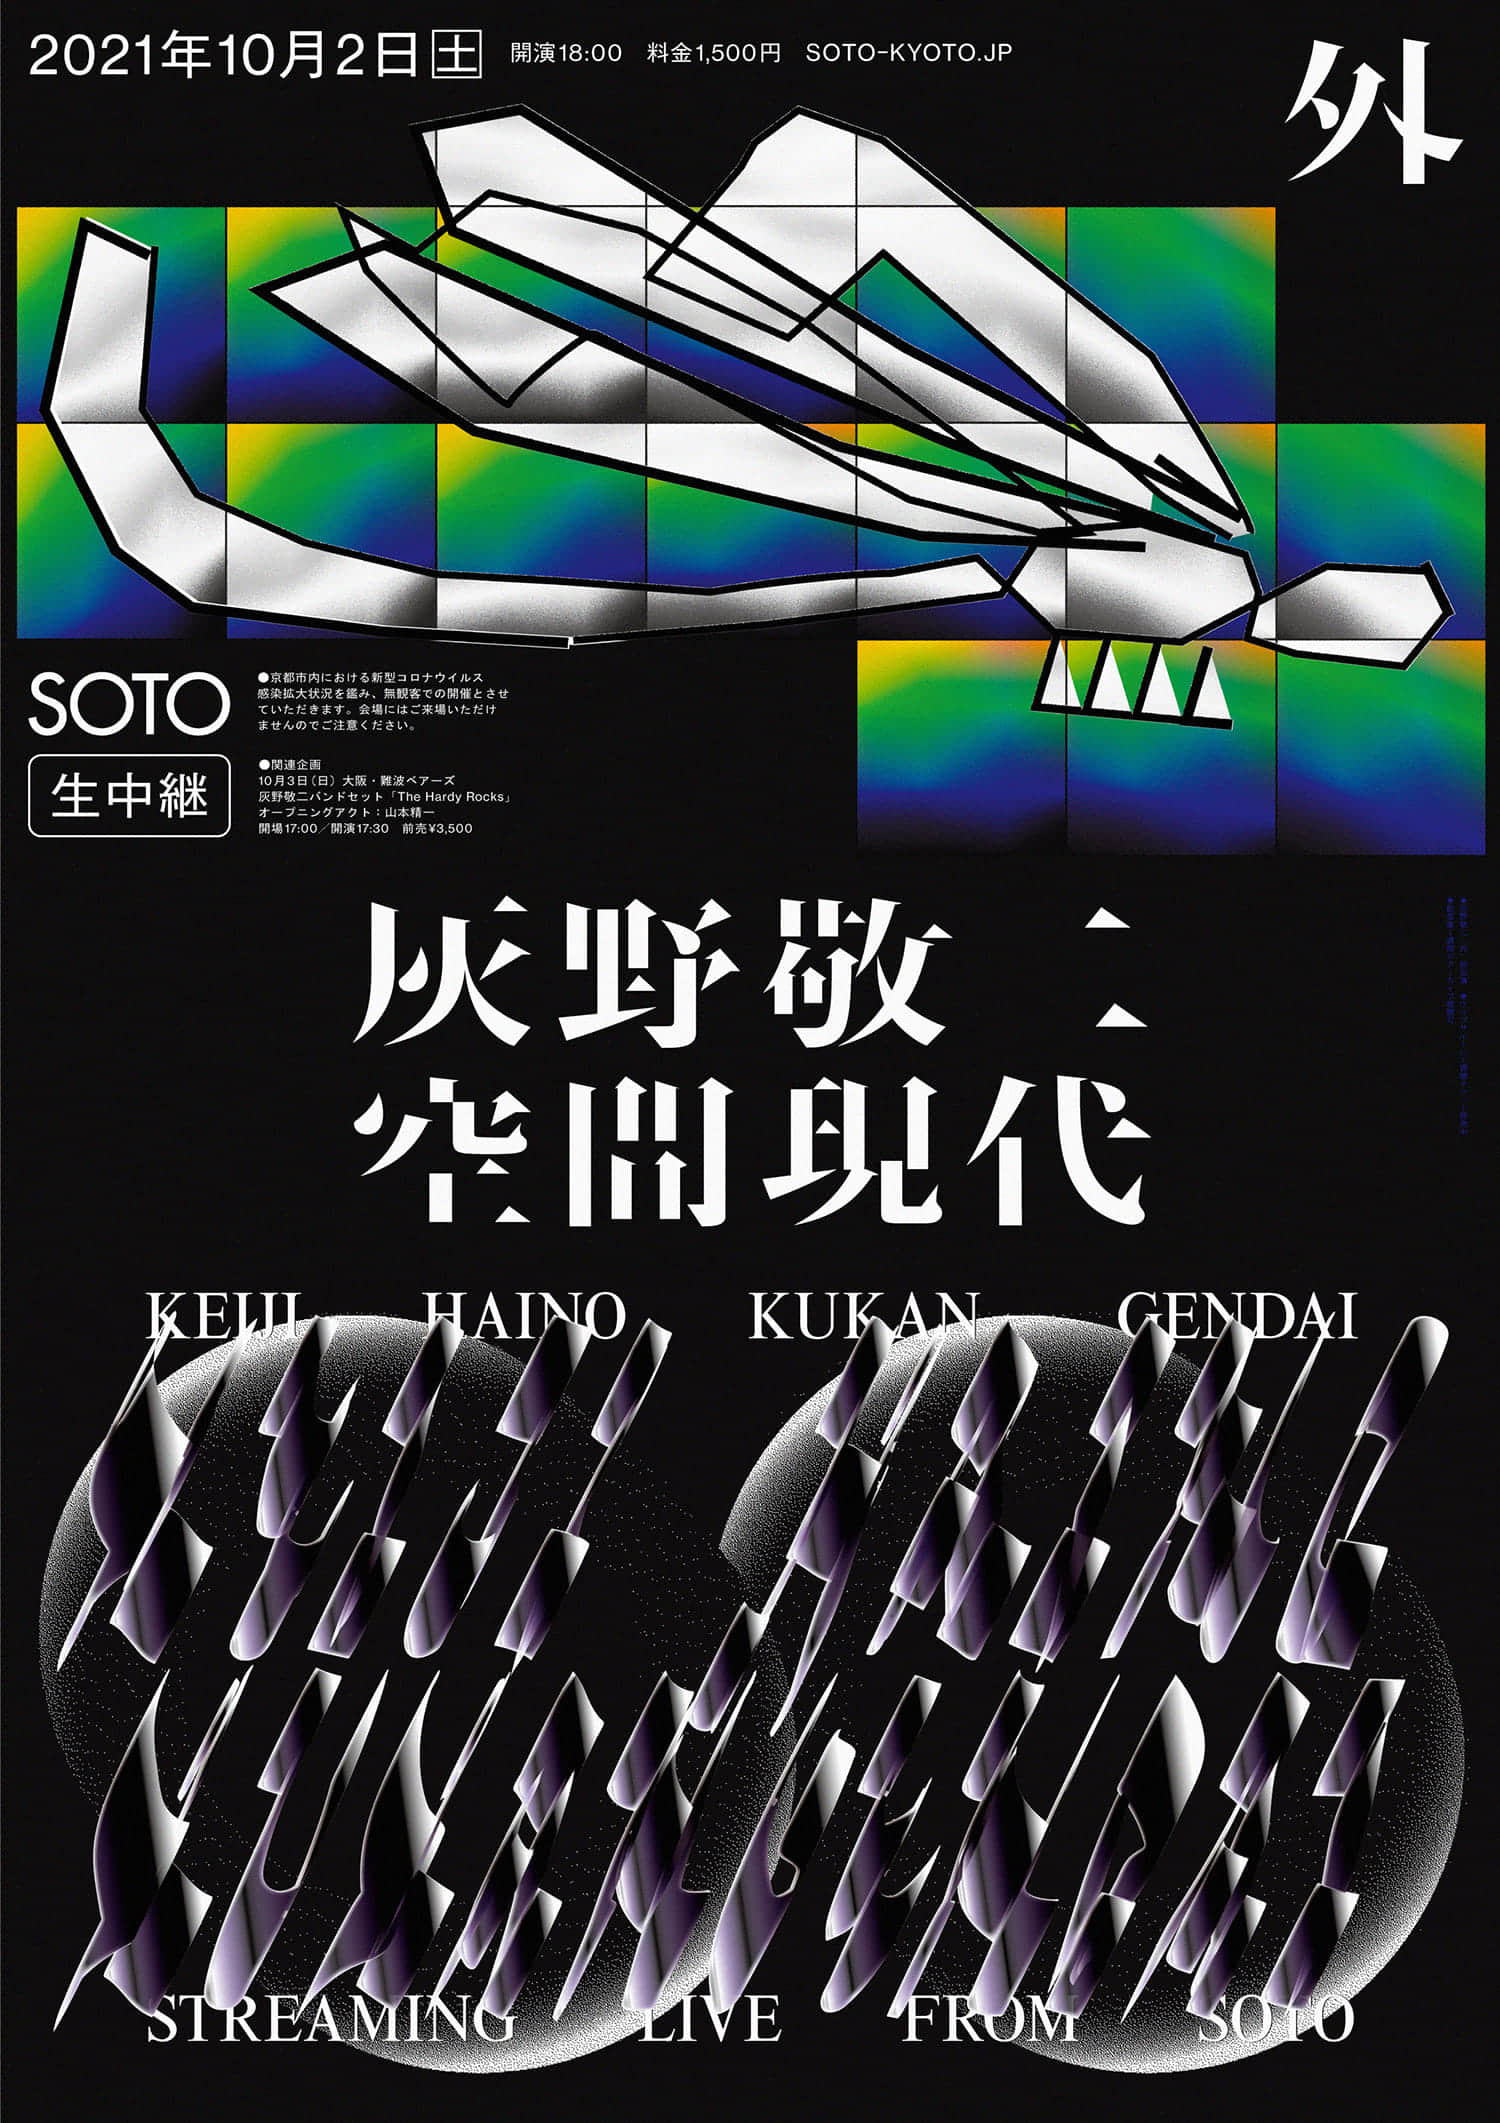 Live：灰野敬二／空間現代 Keiji Haino streaming live from Soto alongside Kyoto’s power trio Kukangendai